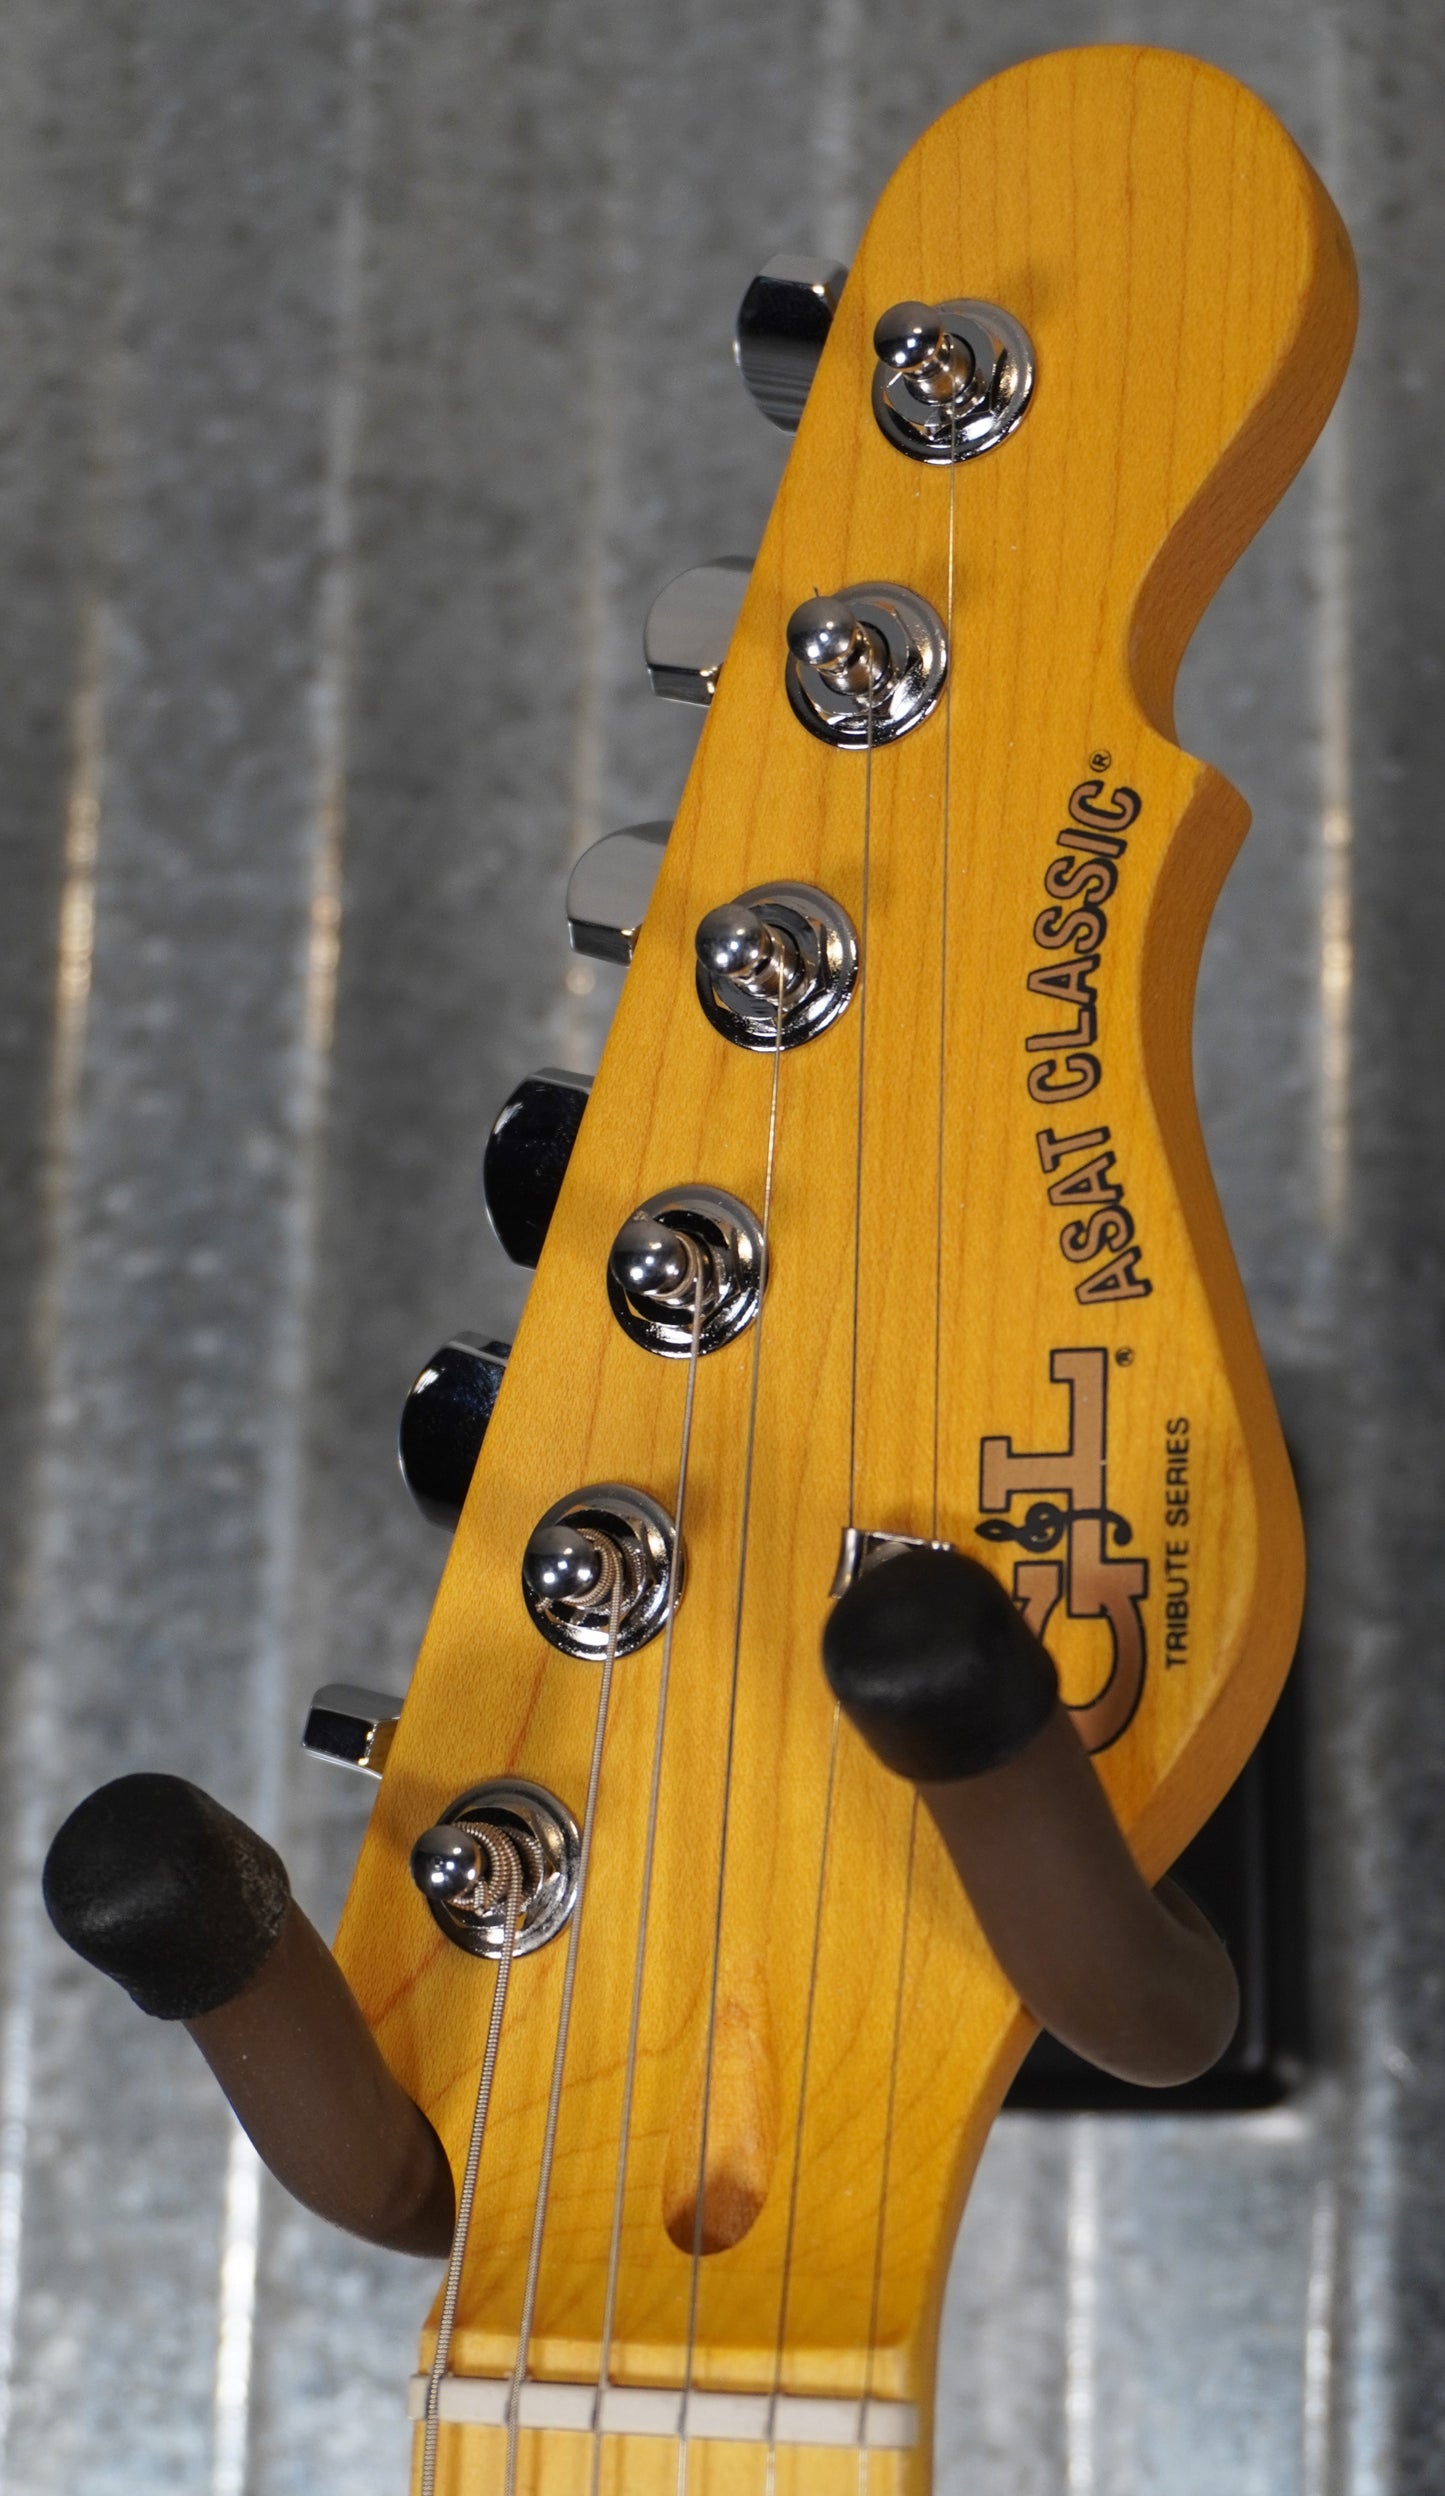 G&L Tribute ASAT Classic Bluesboy Clear Orange Semi Hollow Guitar #0435